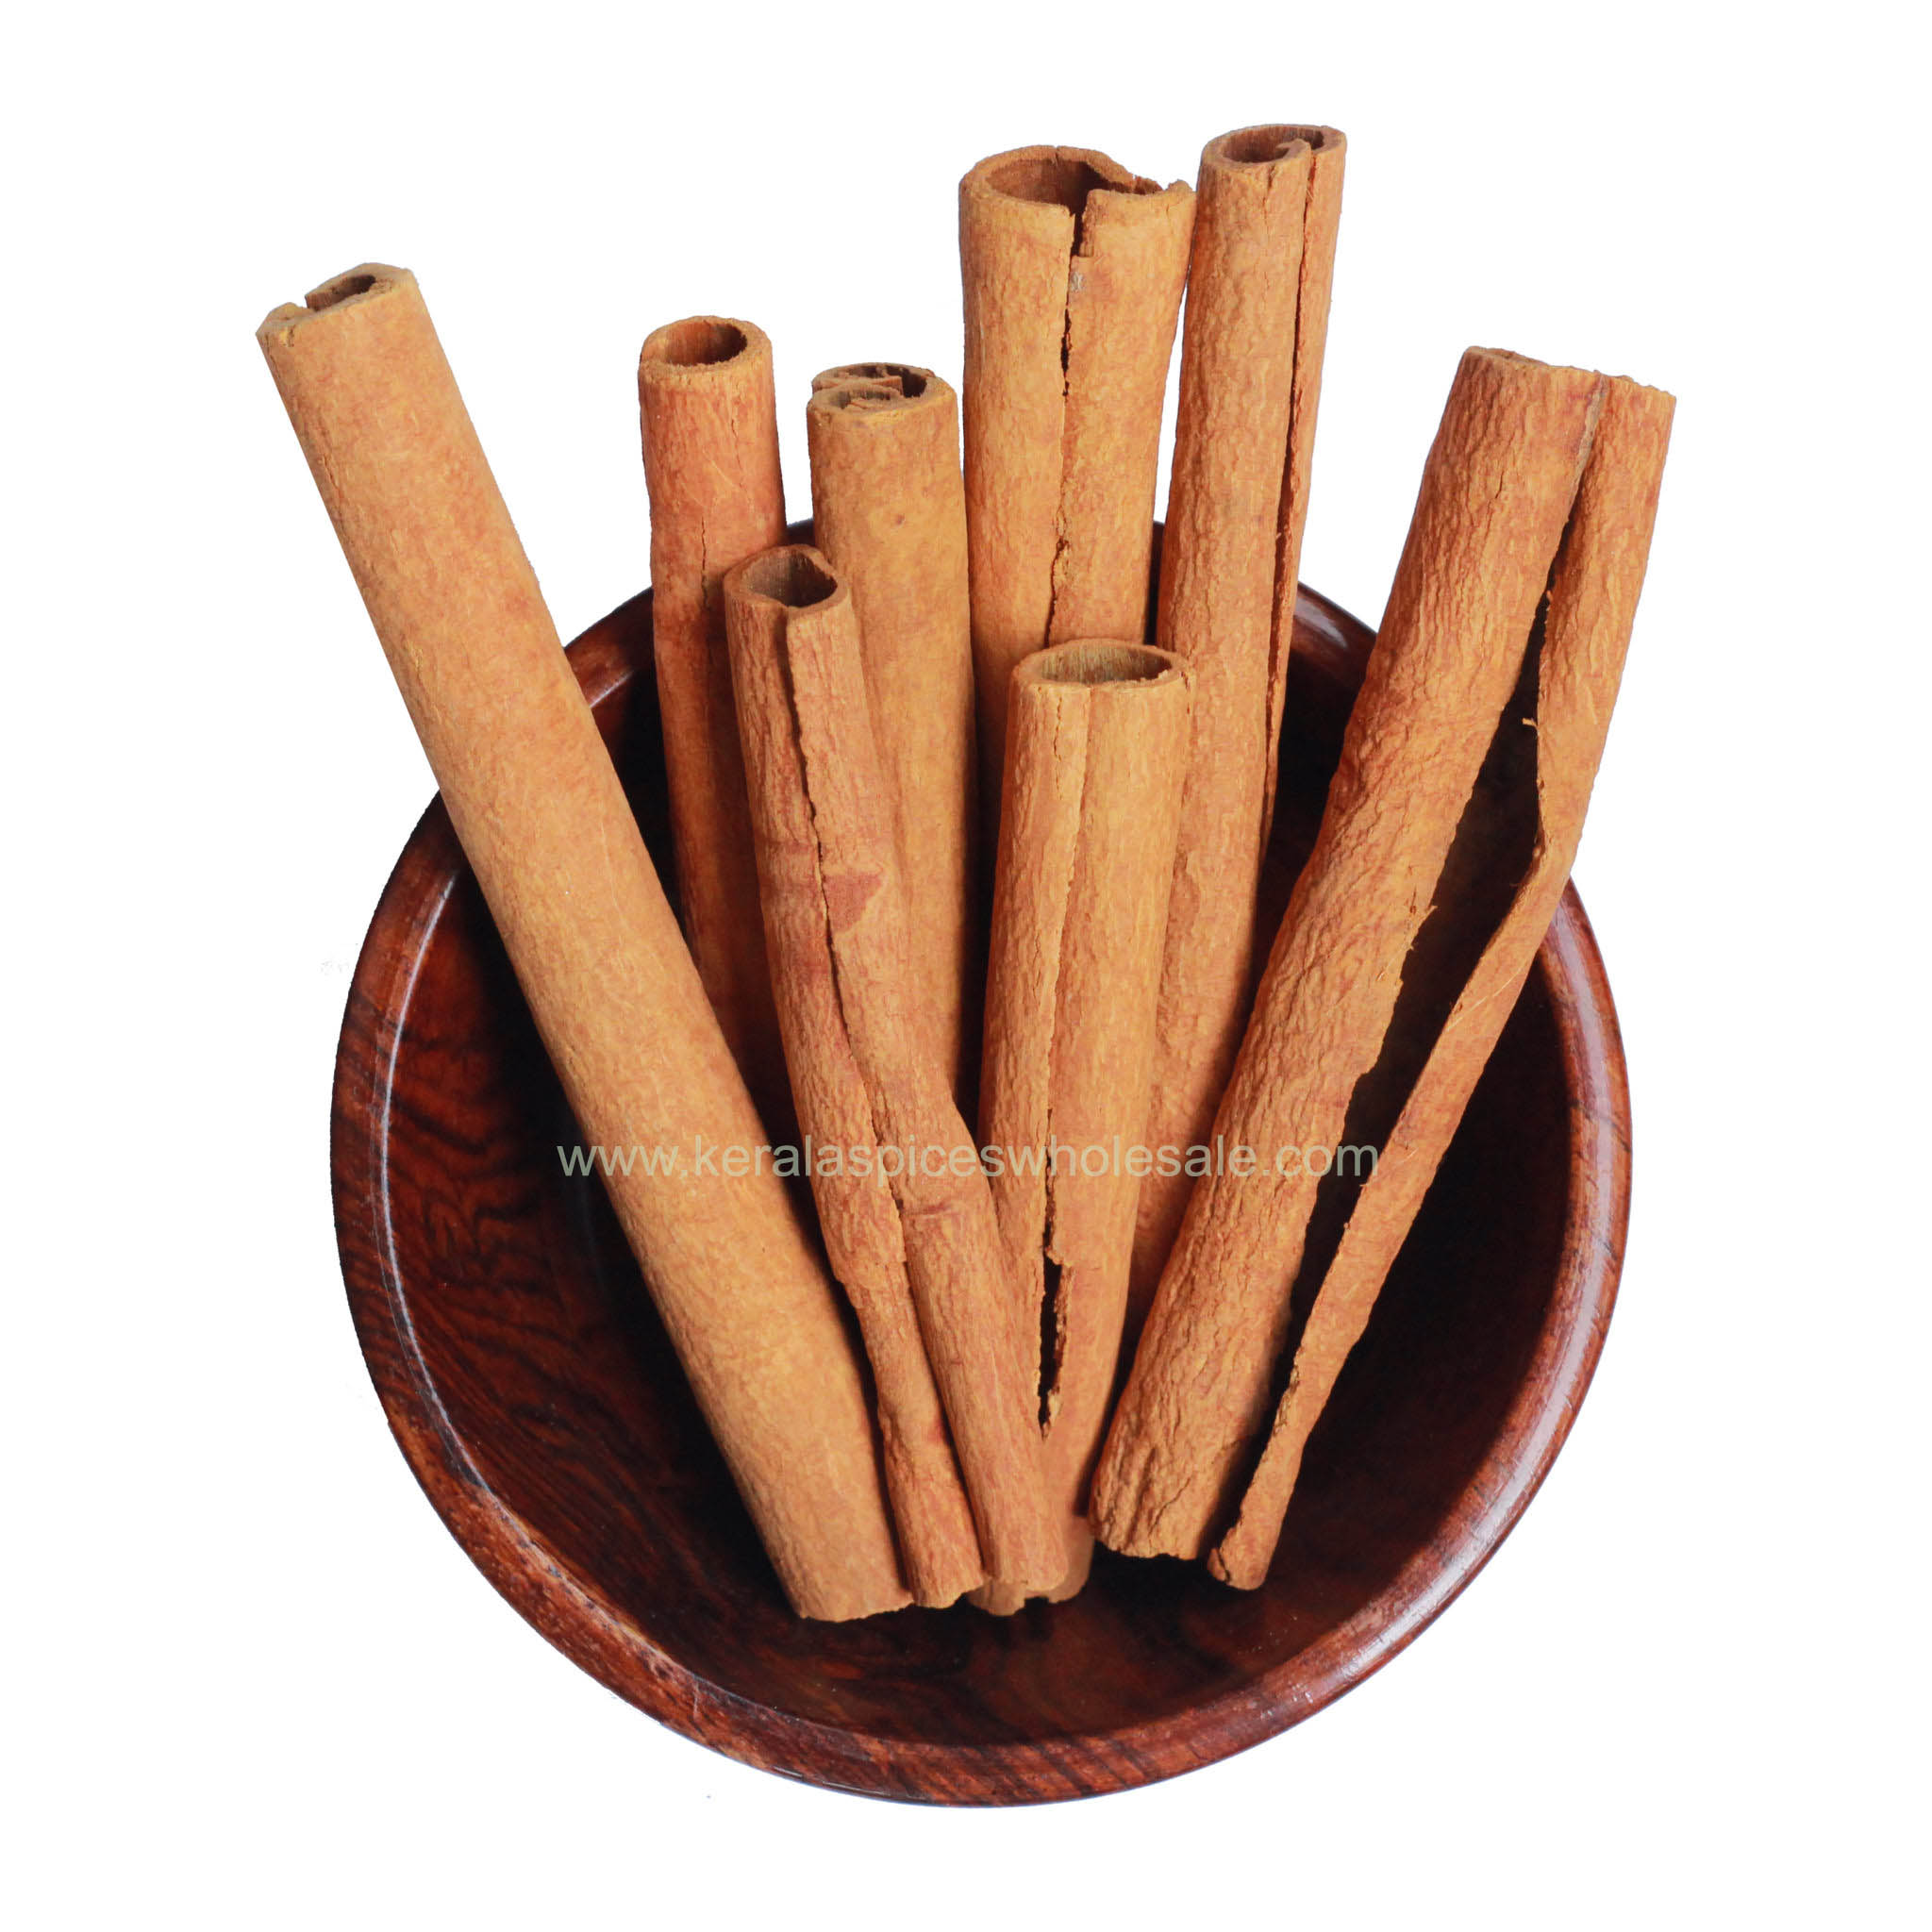 Buy Cinnamon Roll - Kerala Spices Wholesale